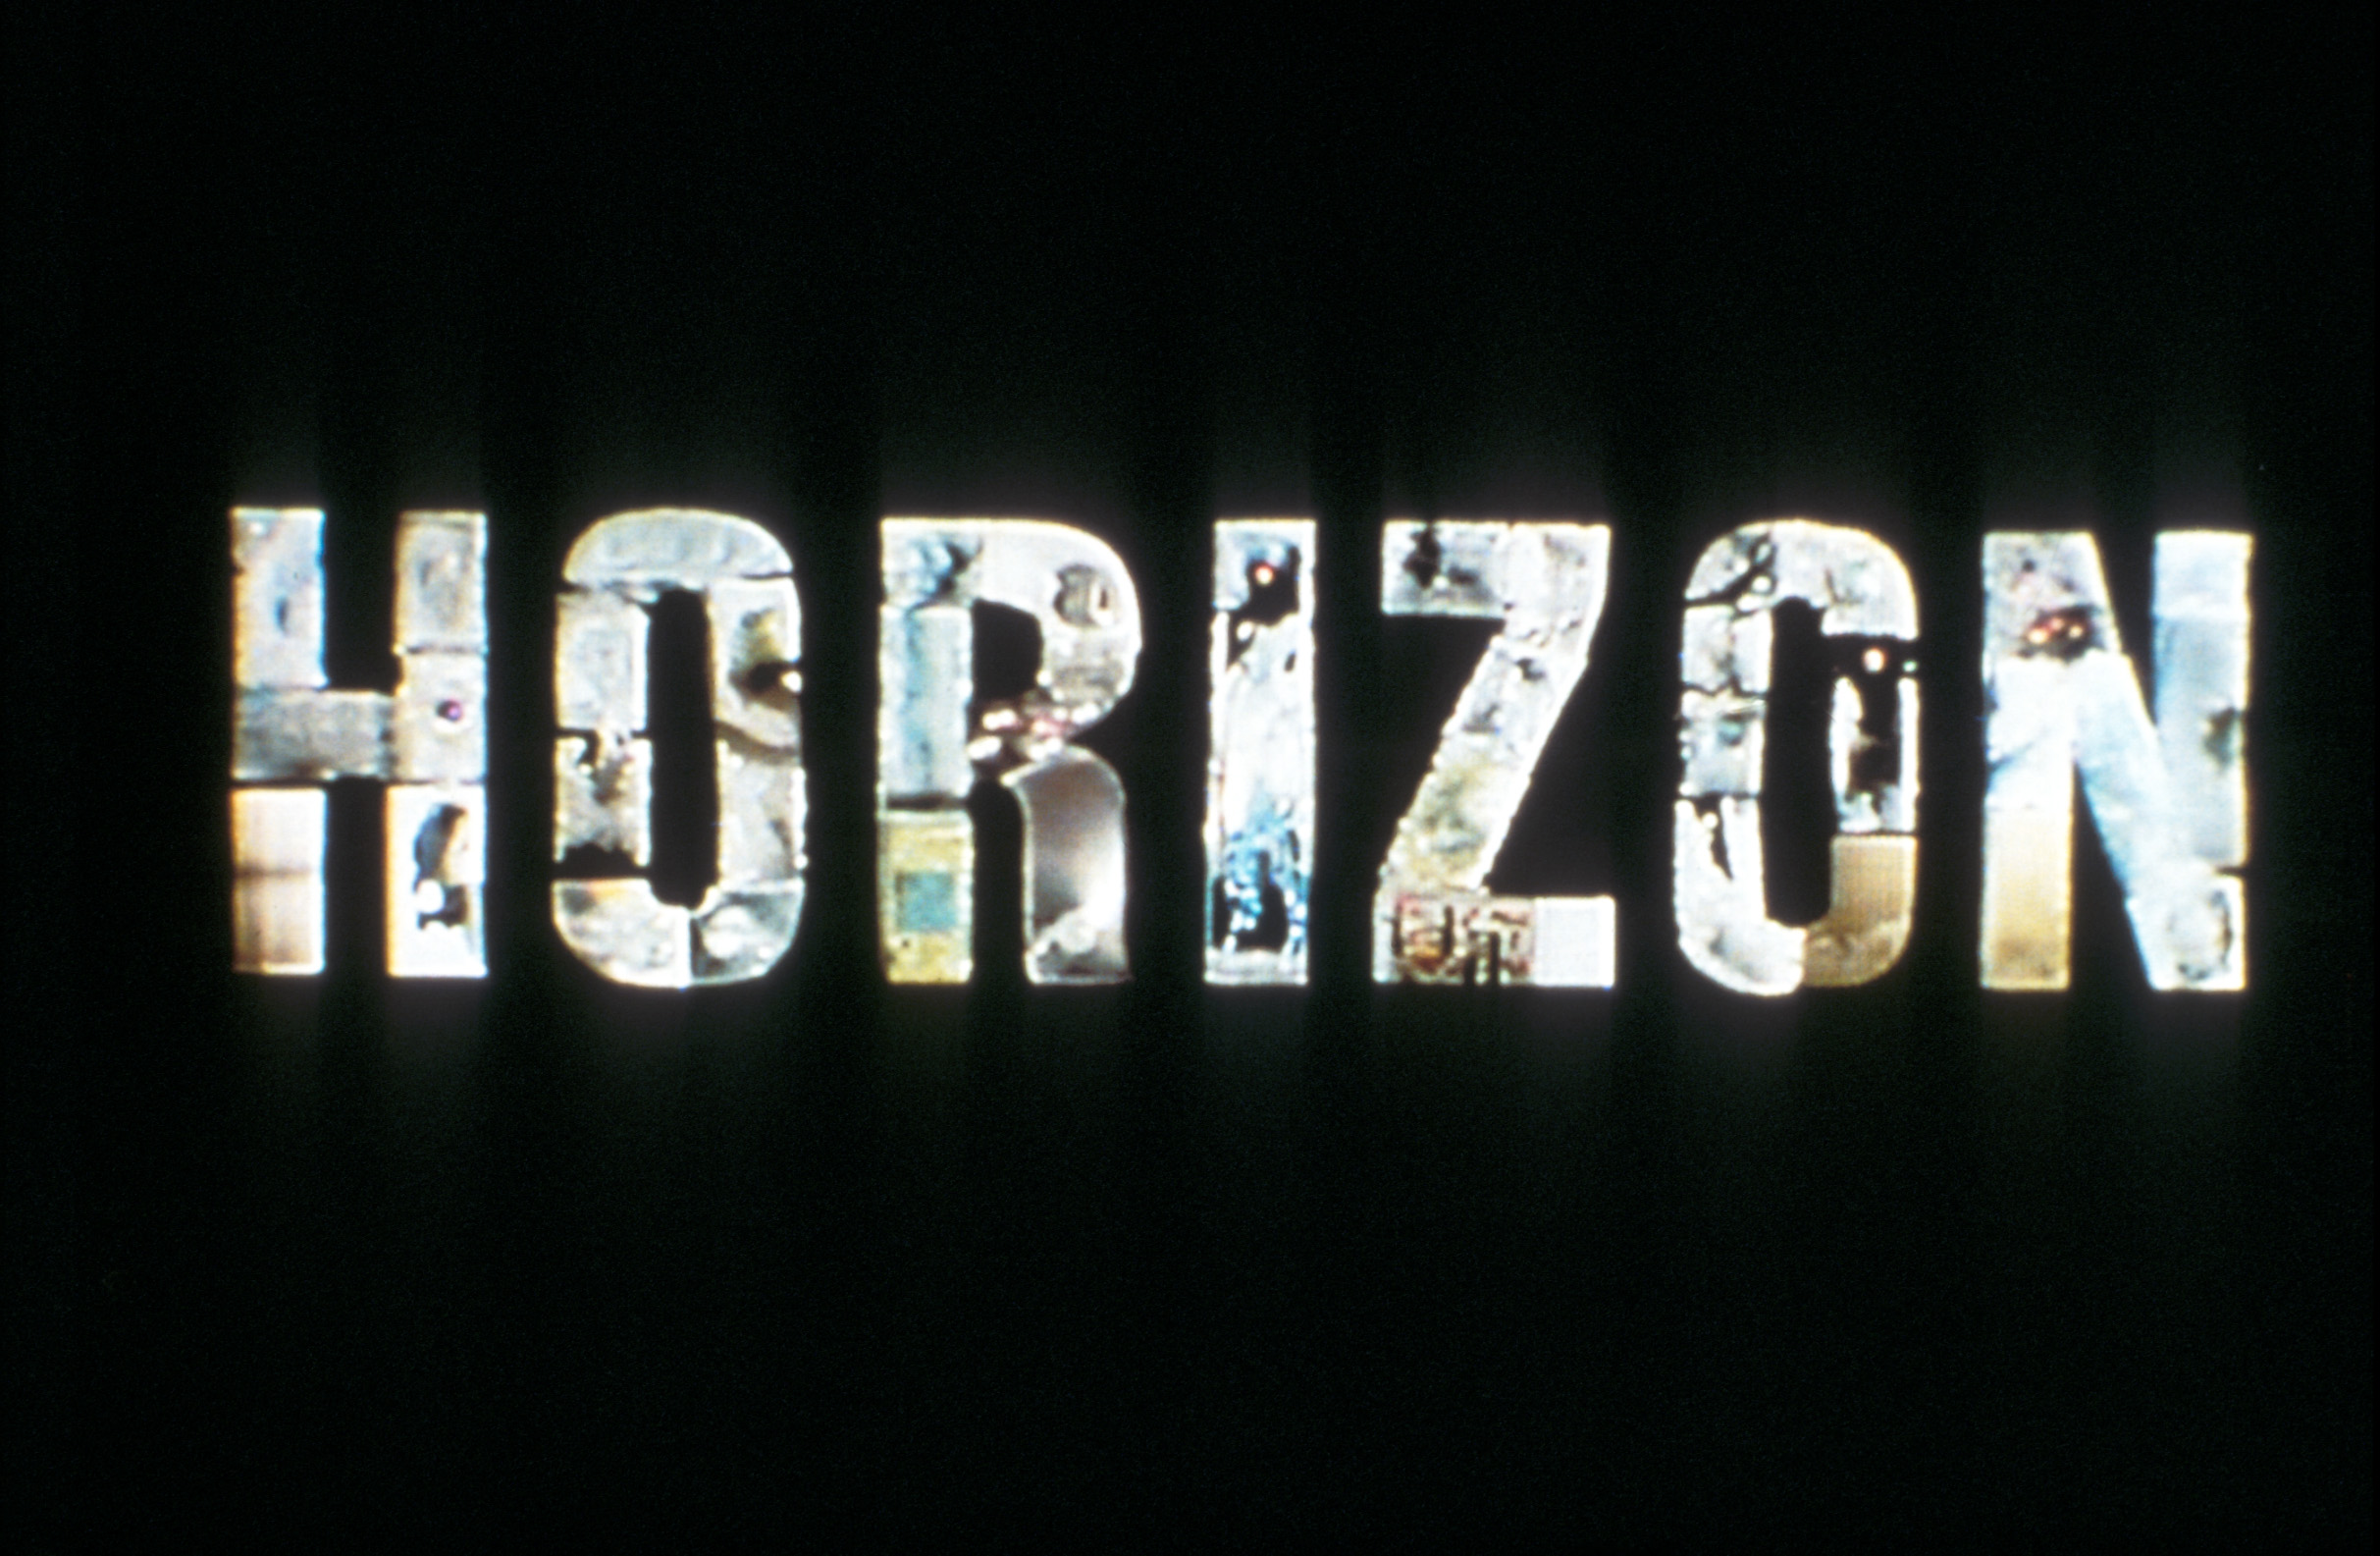 The 1991 Horizon logo. Credit: BBC